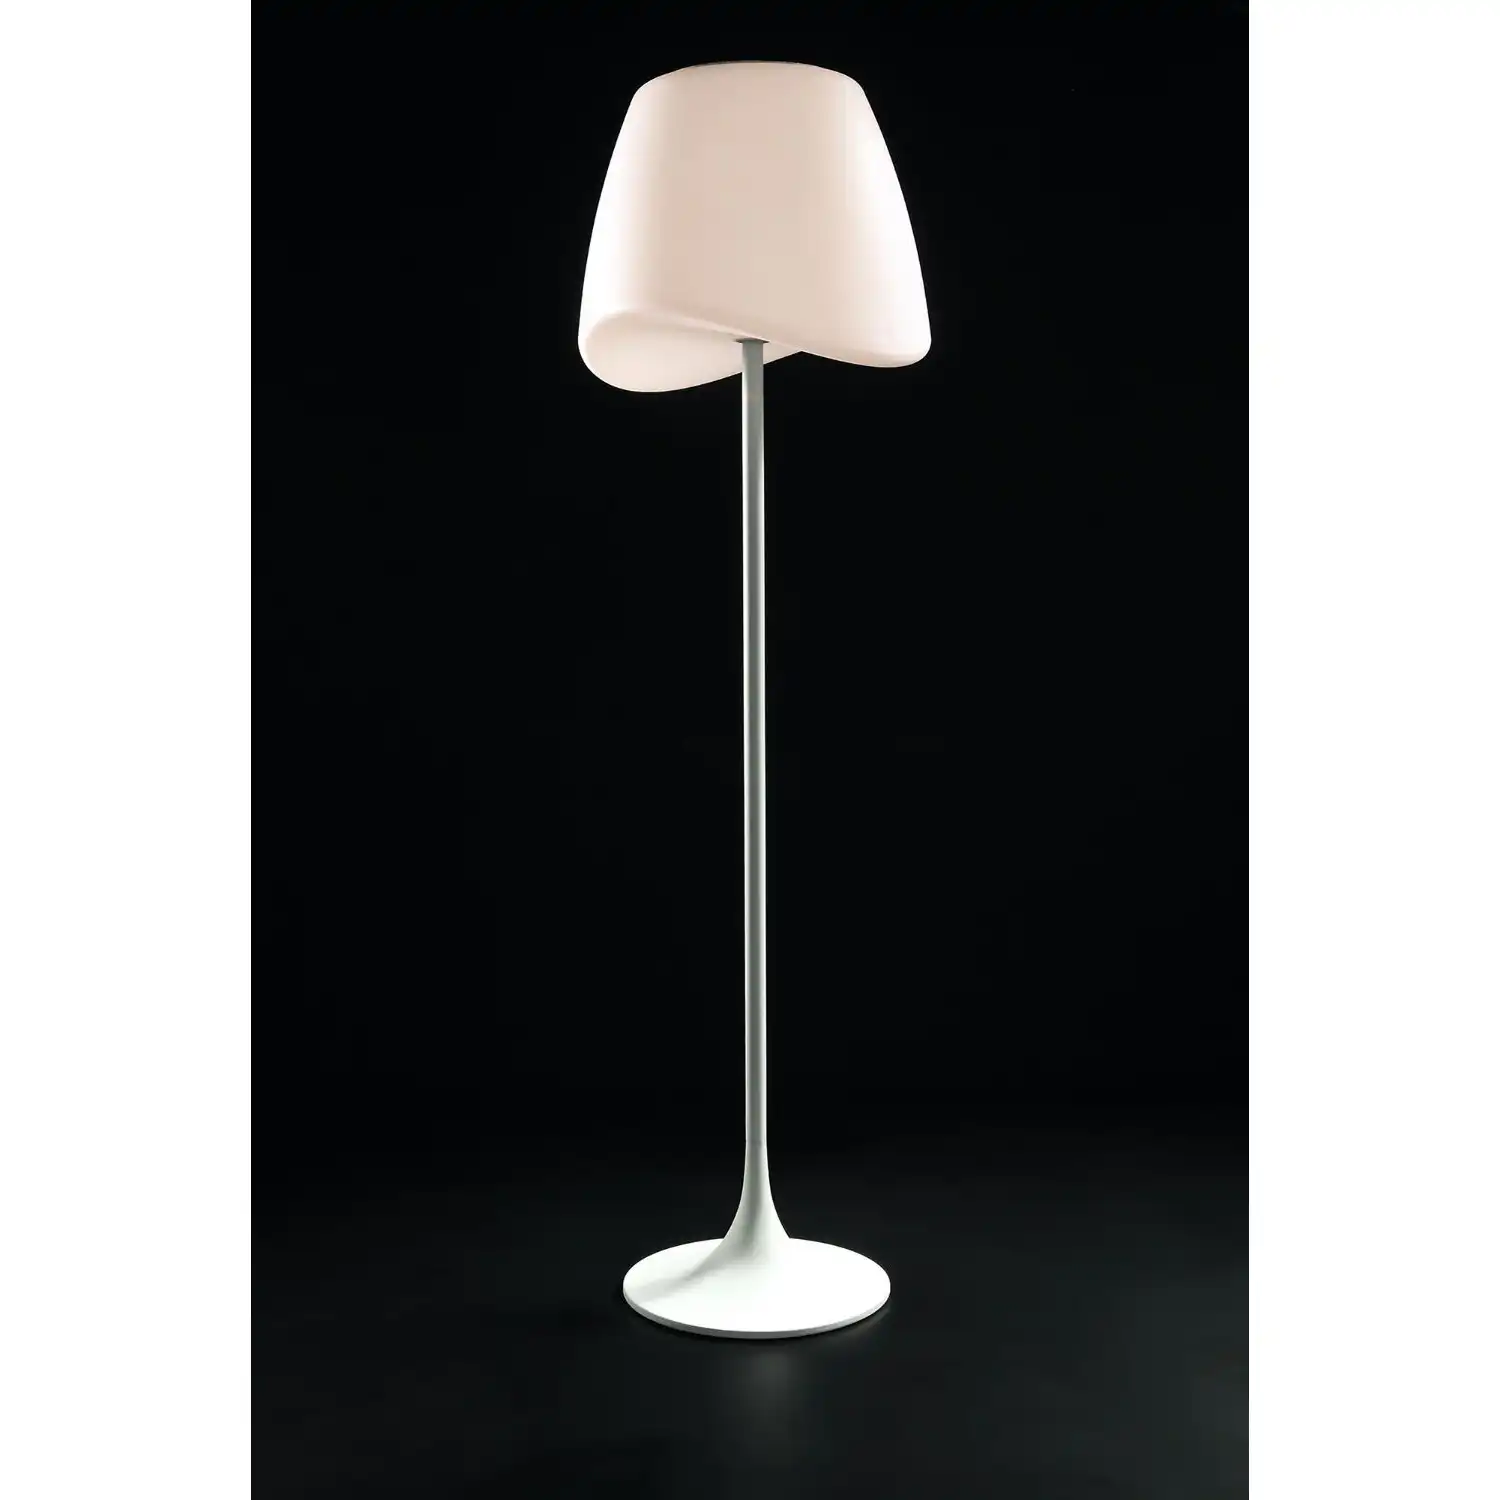 Cool Floor Lamp 2 Light E27 Foot Switch Indoor, Matt White Opal White Item Weight: 22.5kg